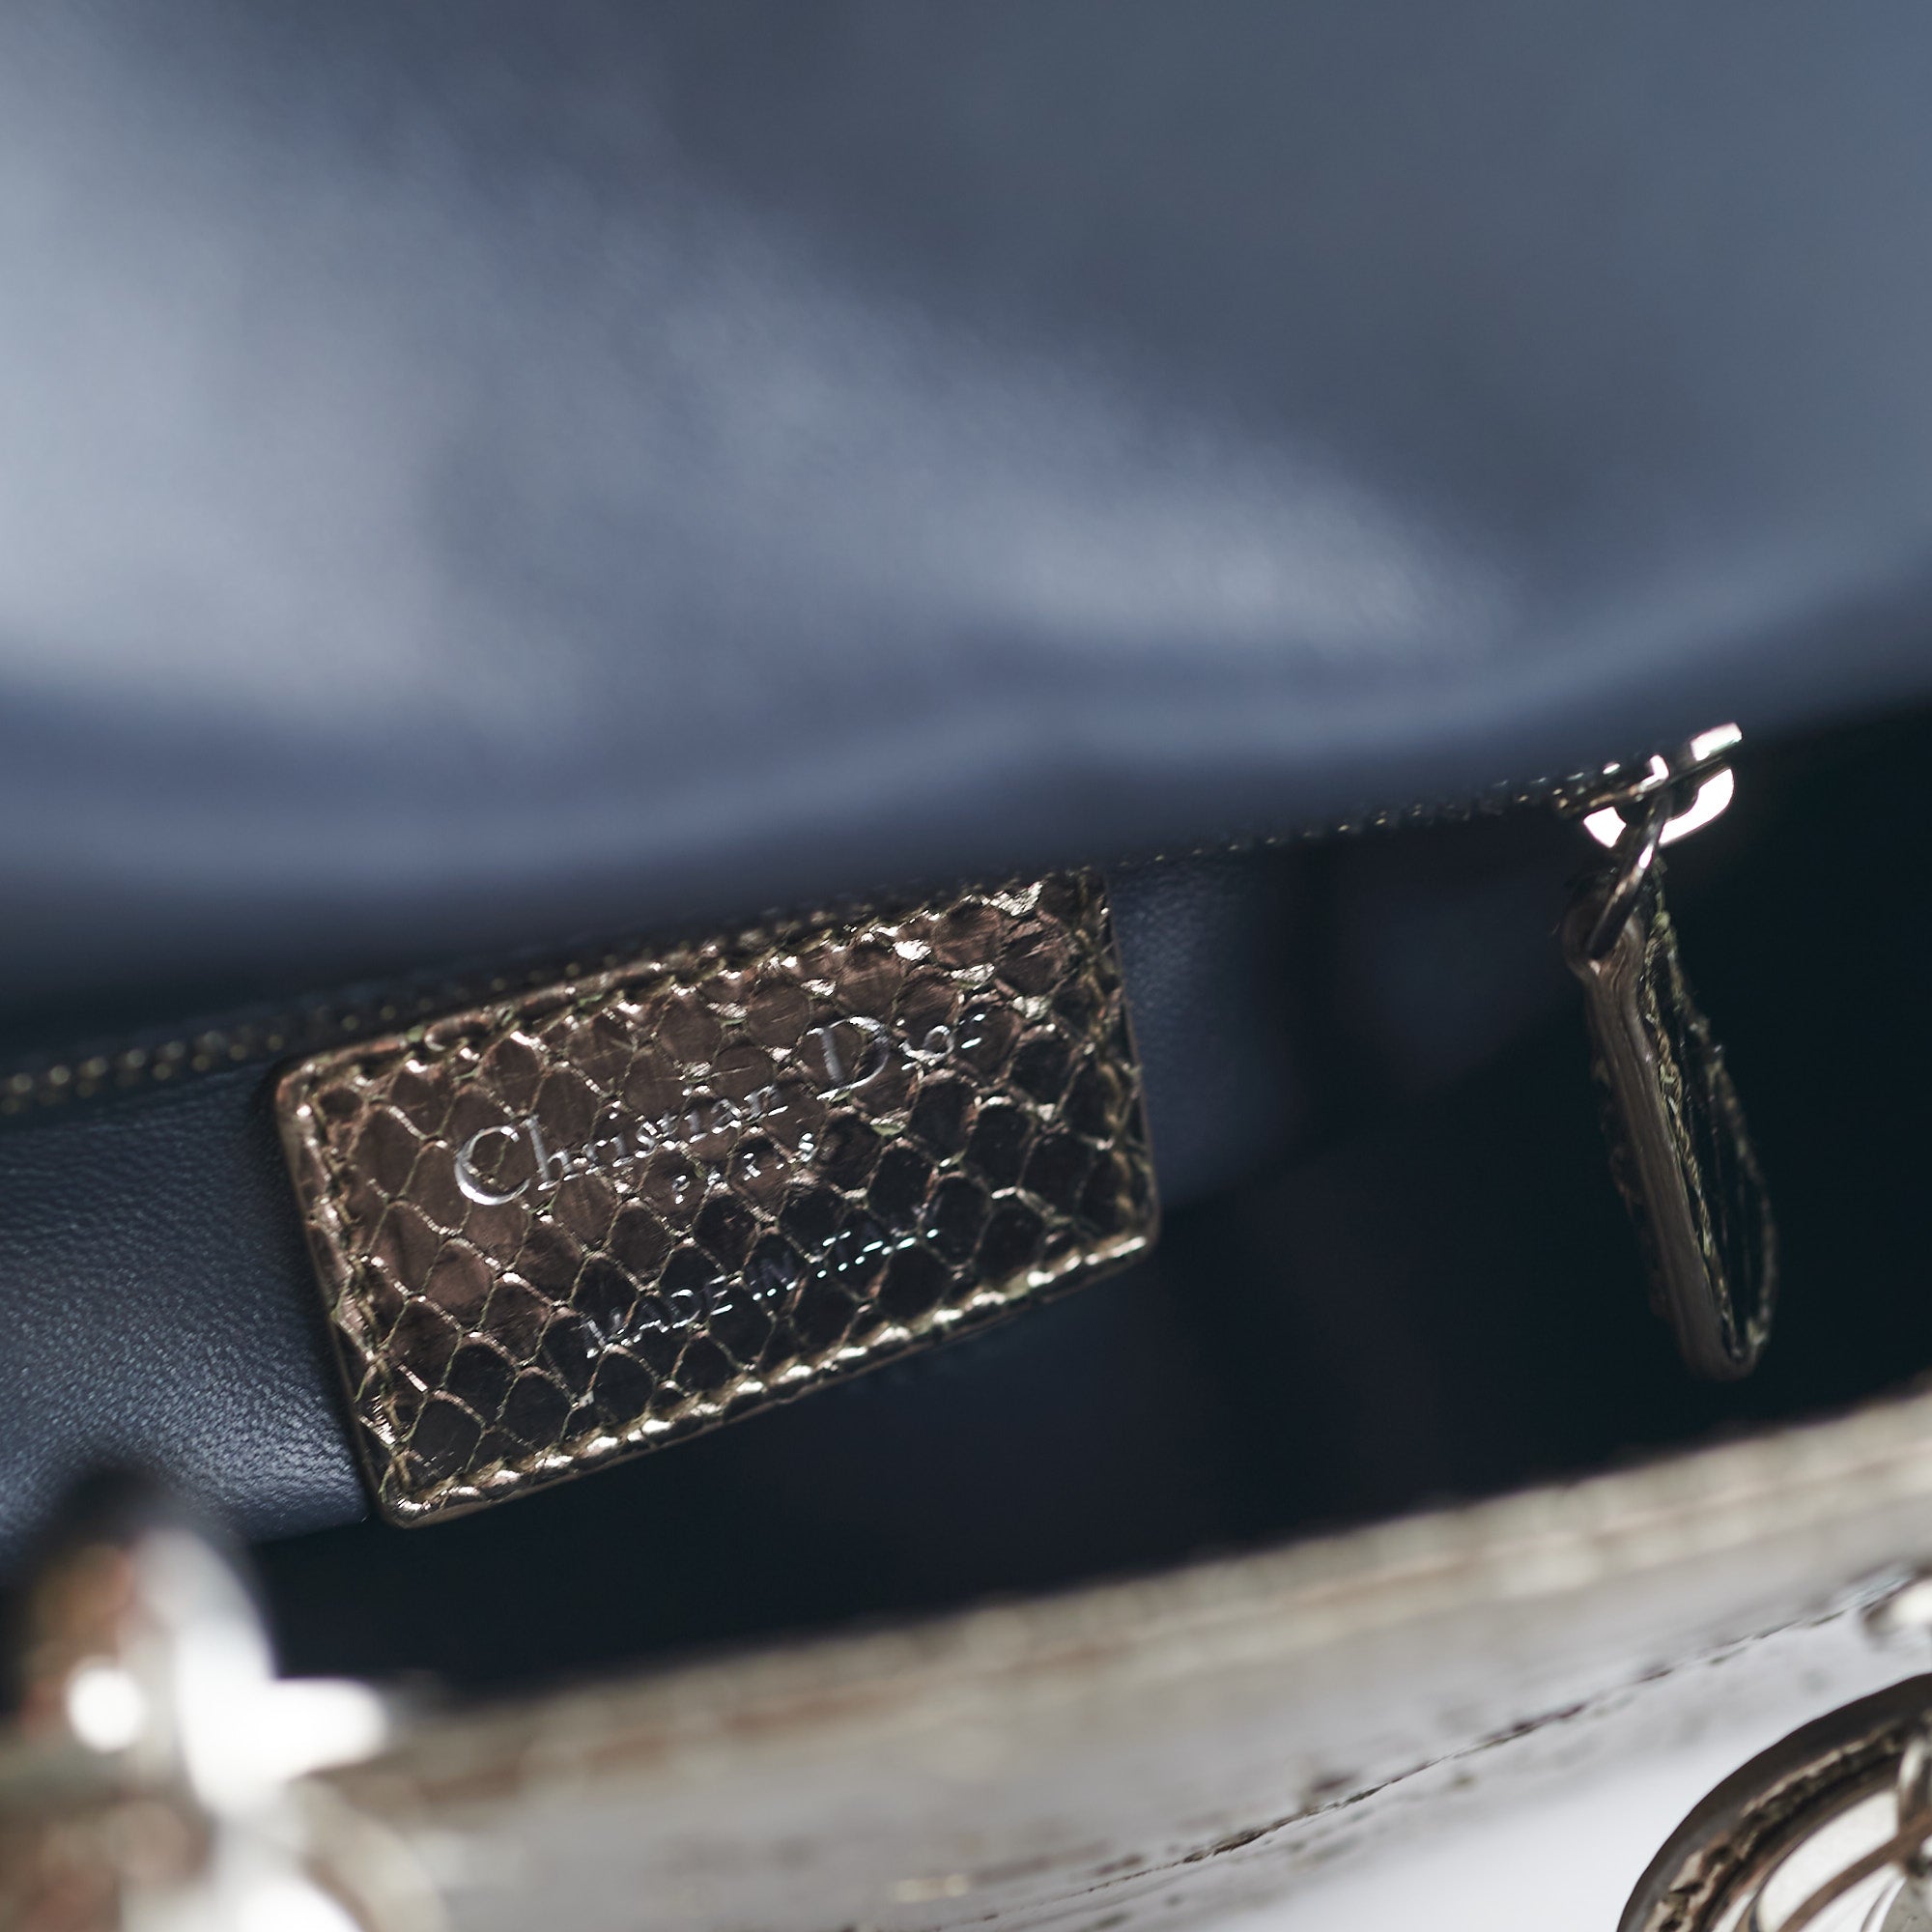 Sold at Auction: λ Christian Dior Metallic Gold Python Mini Lady Dior Bag